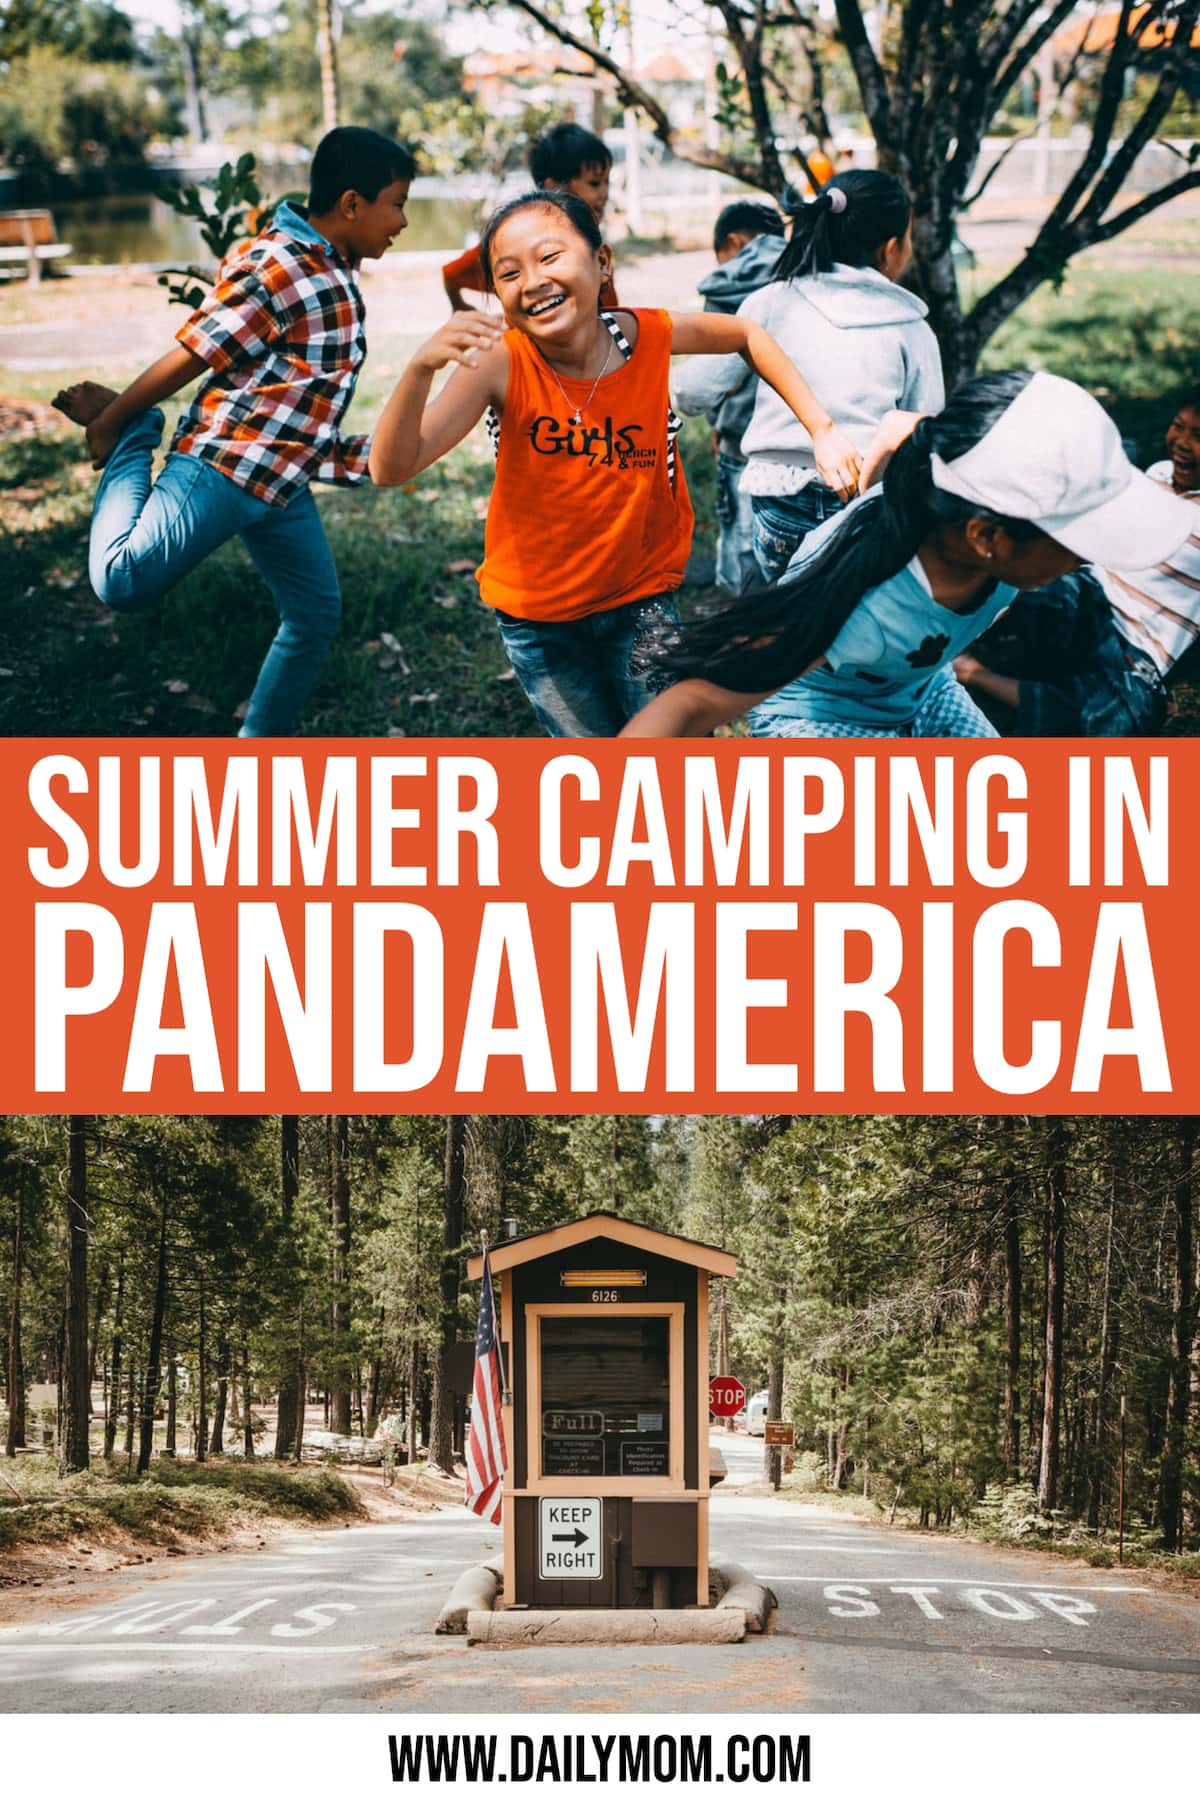 Summer Camping In Pandamerica